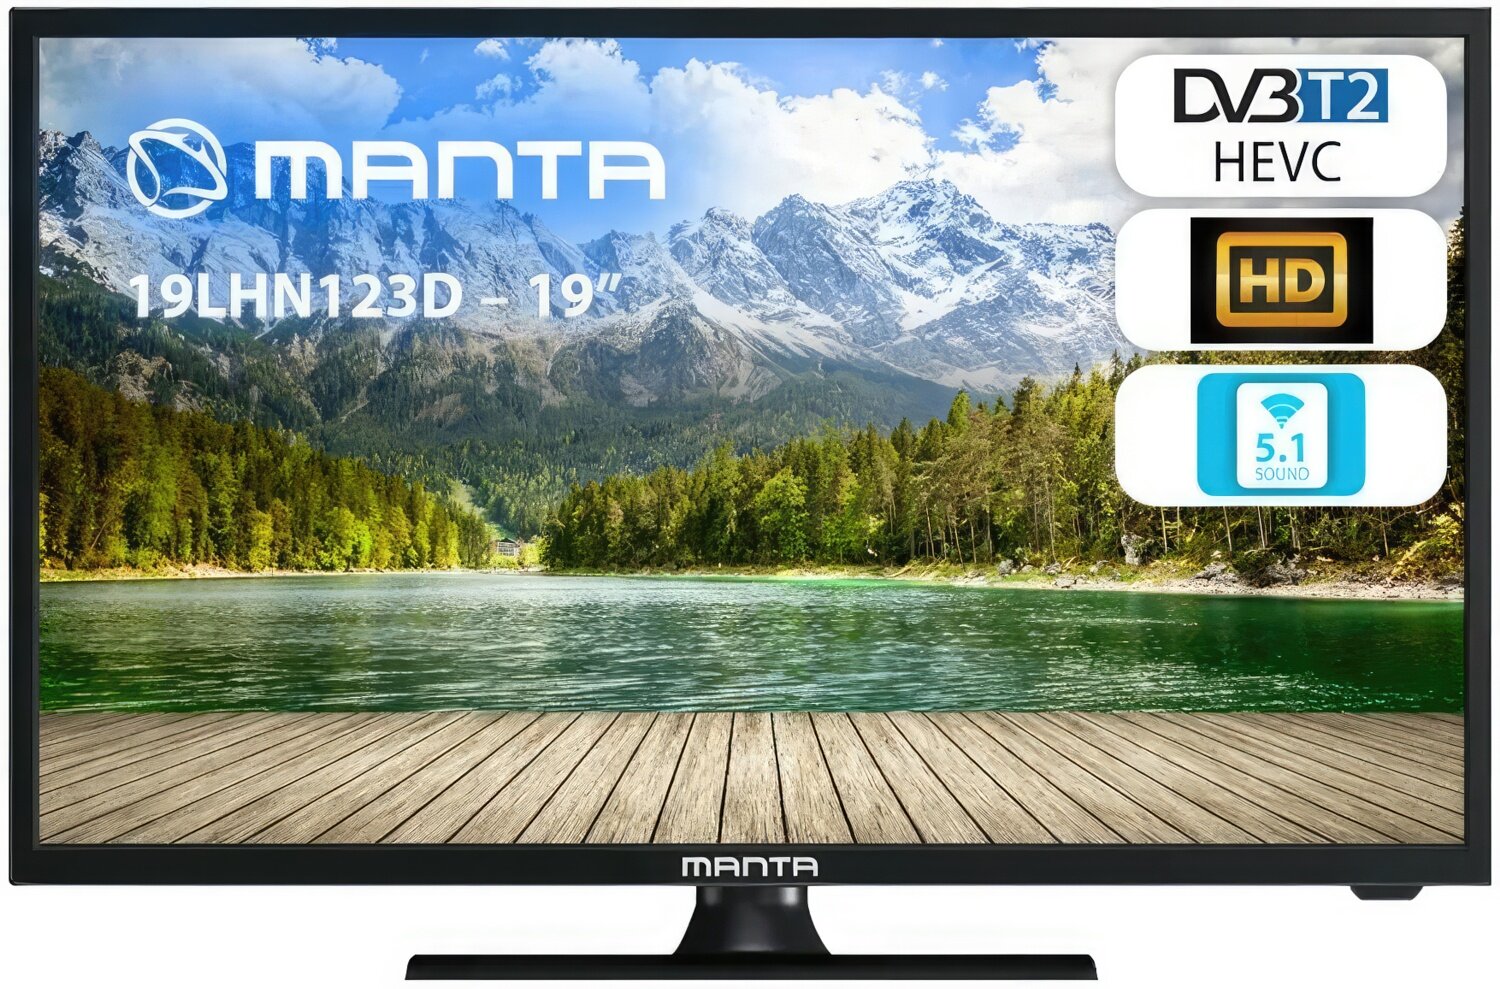 Telewizor Manta LED 19LHN123D